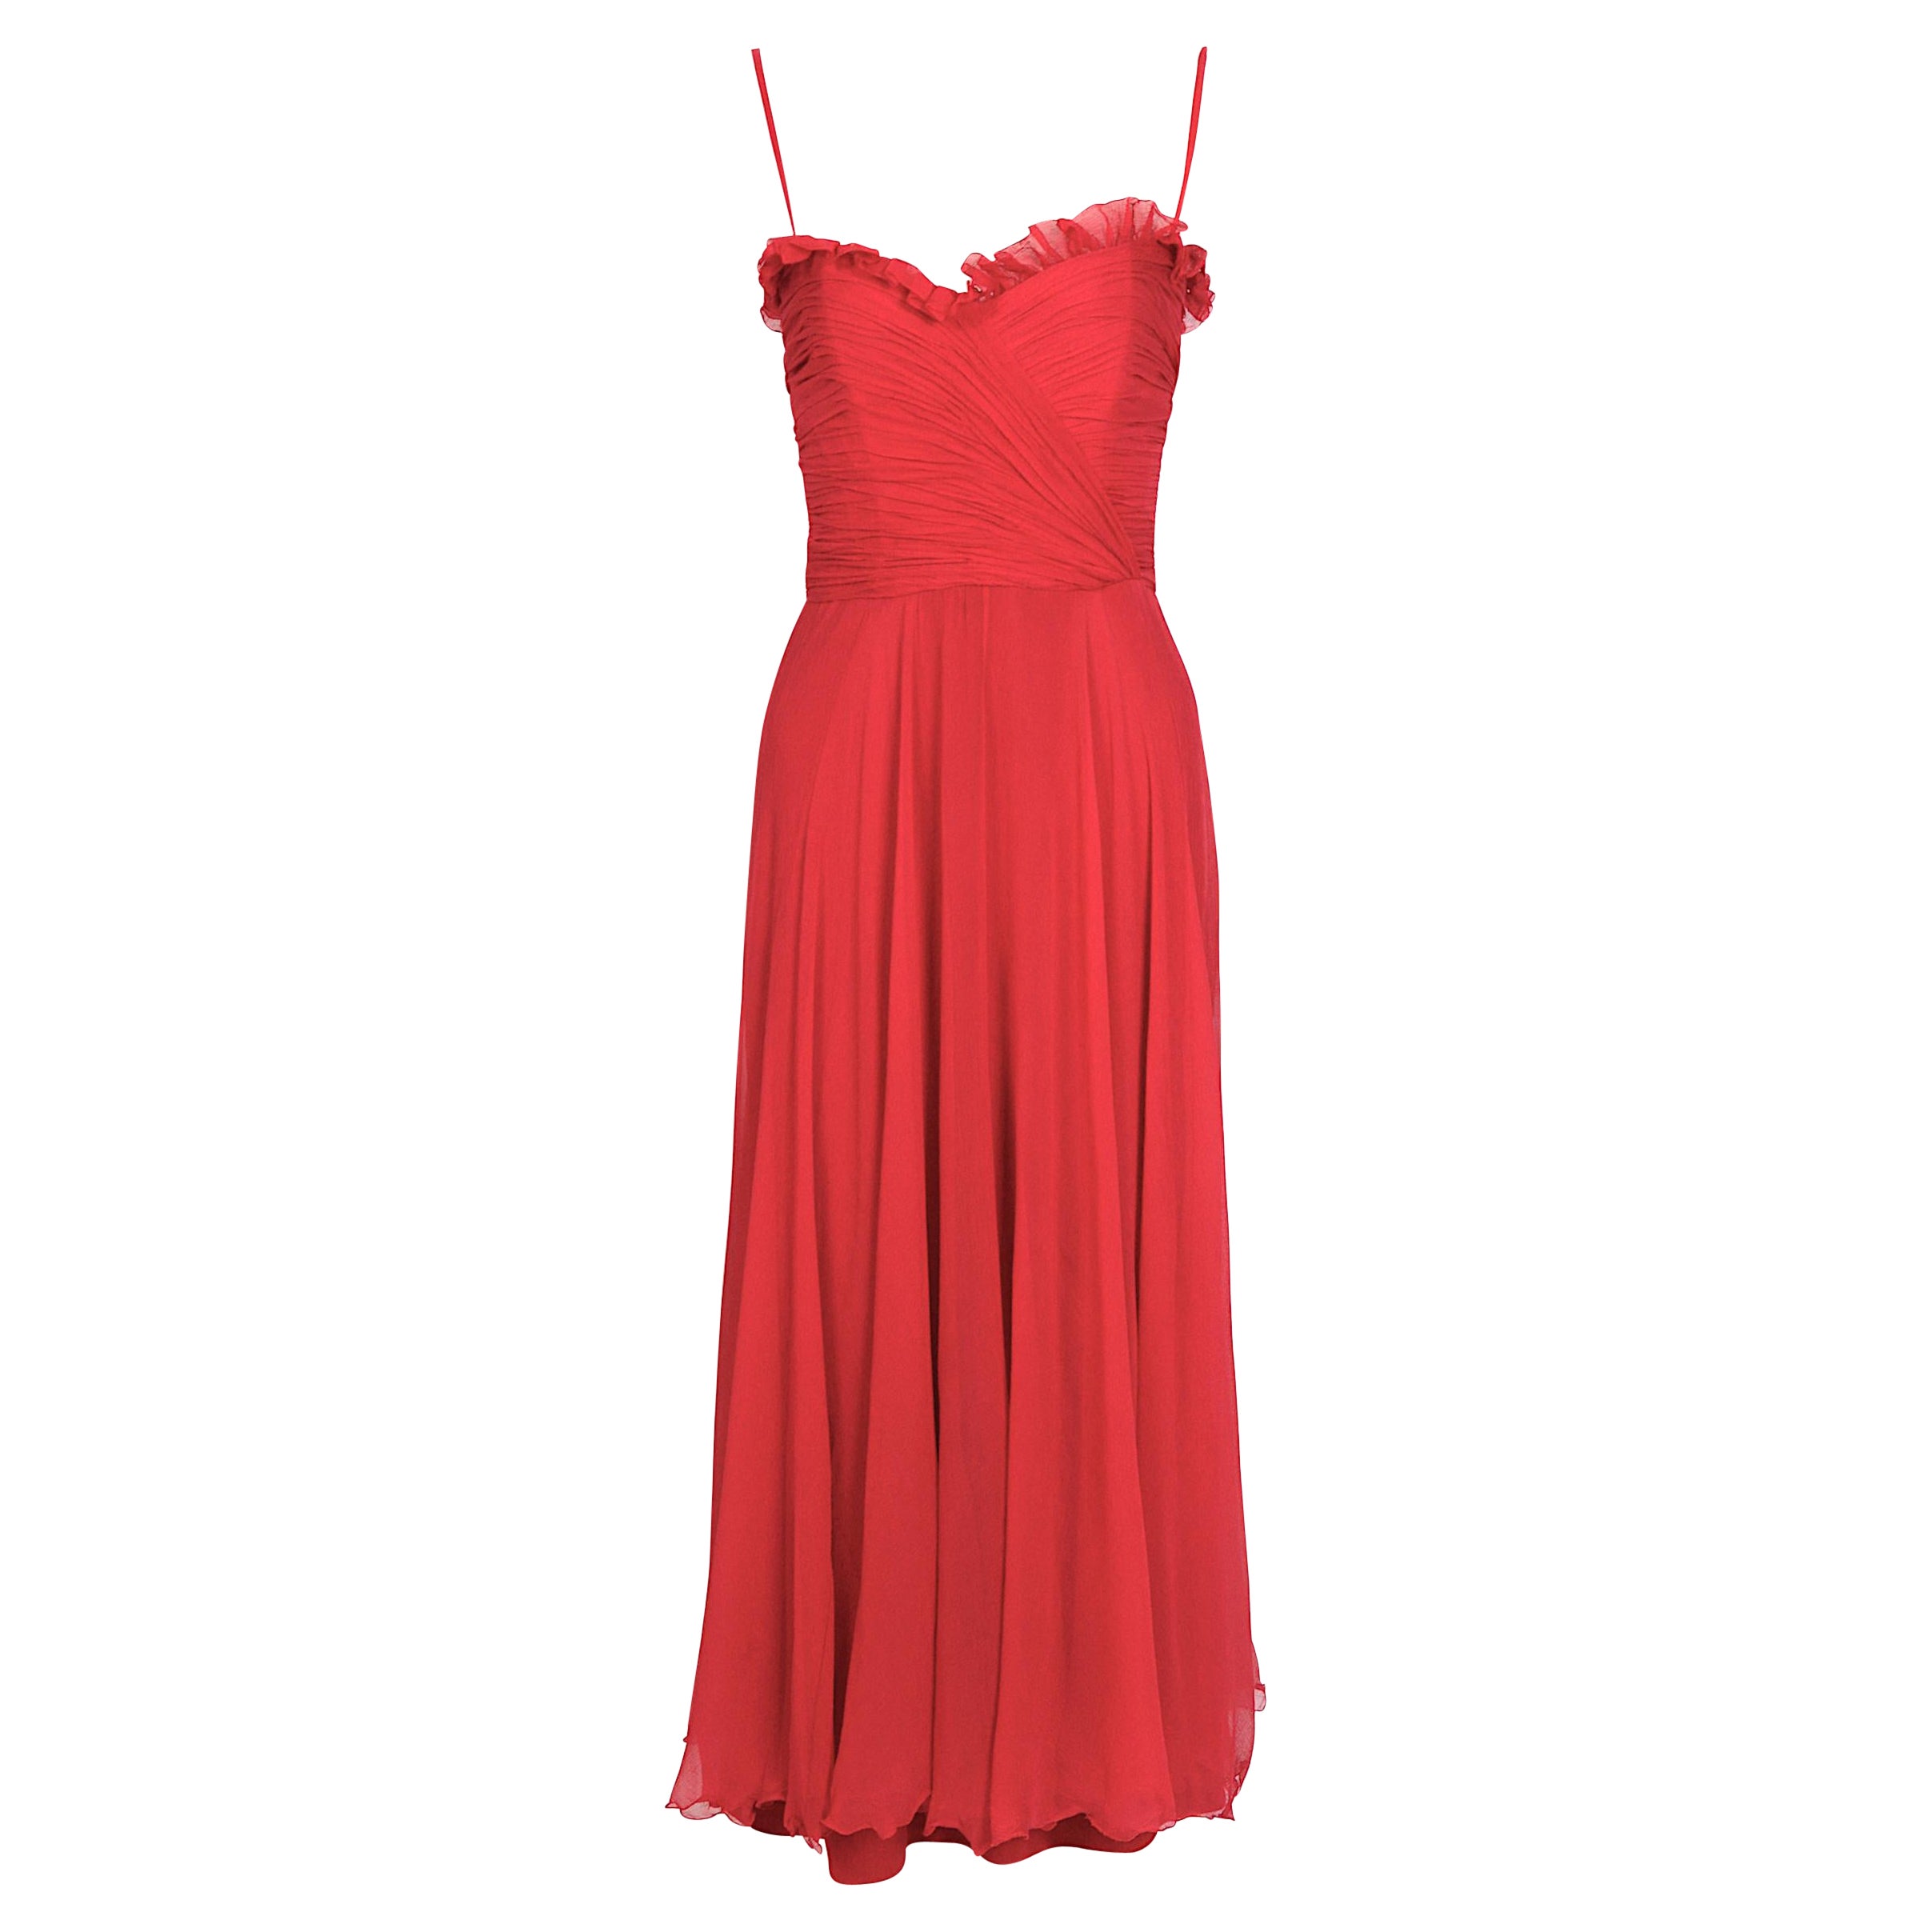 Loris Azzaro 1970s vintage collectors red silk chiffon draped bodice dress